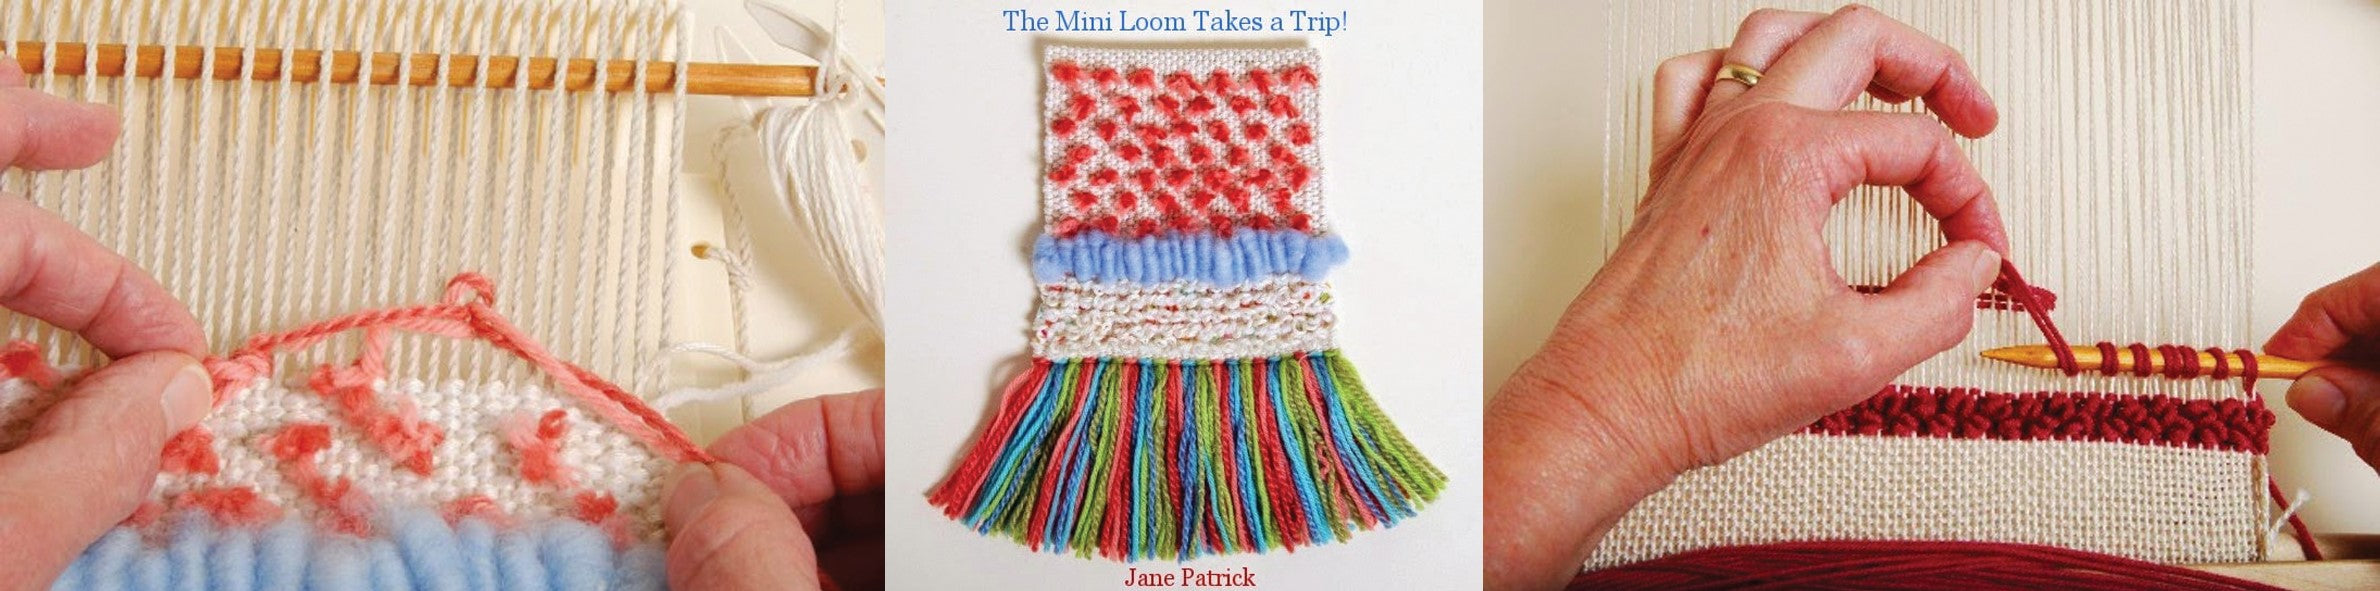 The Mini Loom Takes A Trip